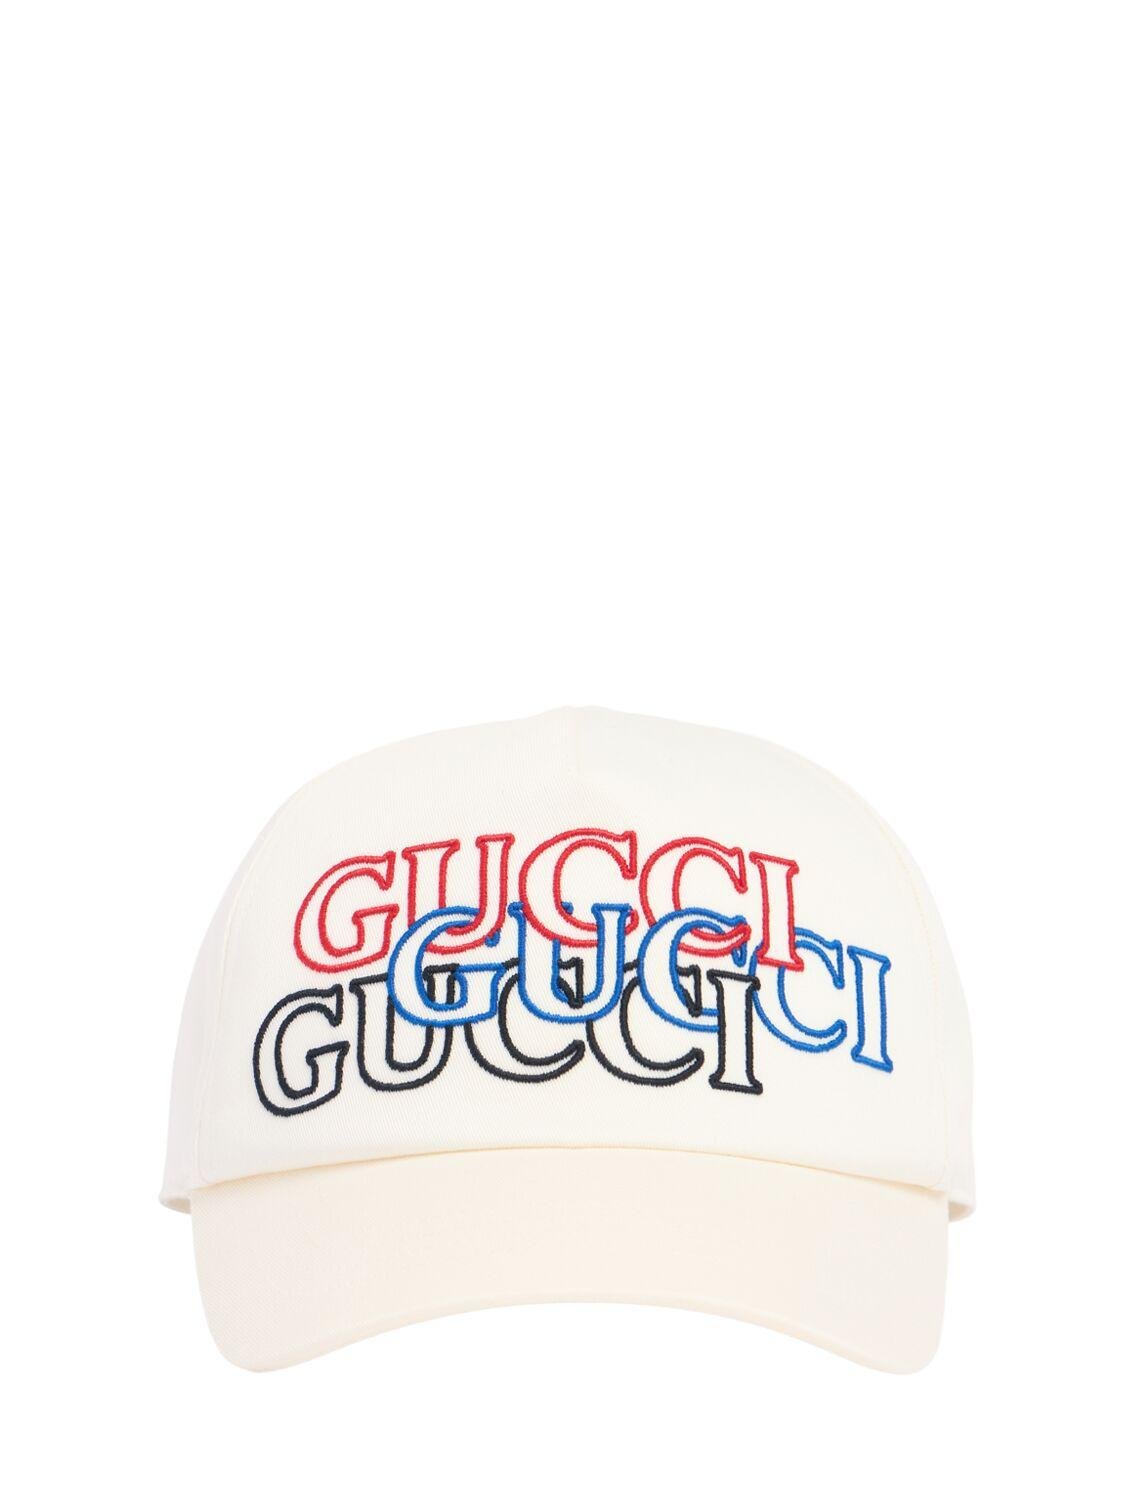 Gucci Embroidery Cotton Baseball Cap by GUCCI